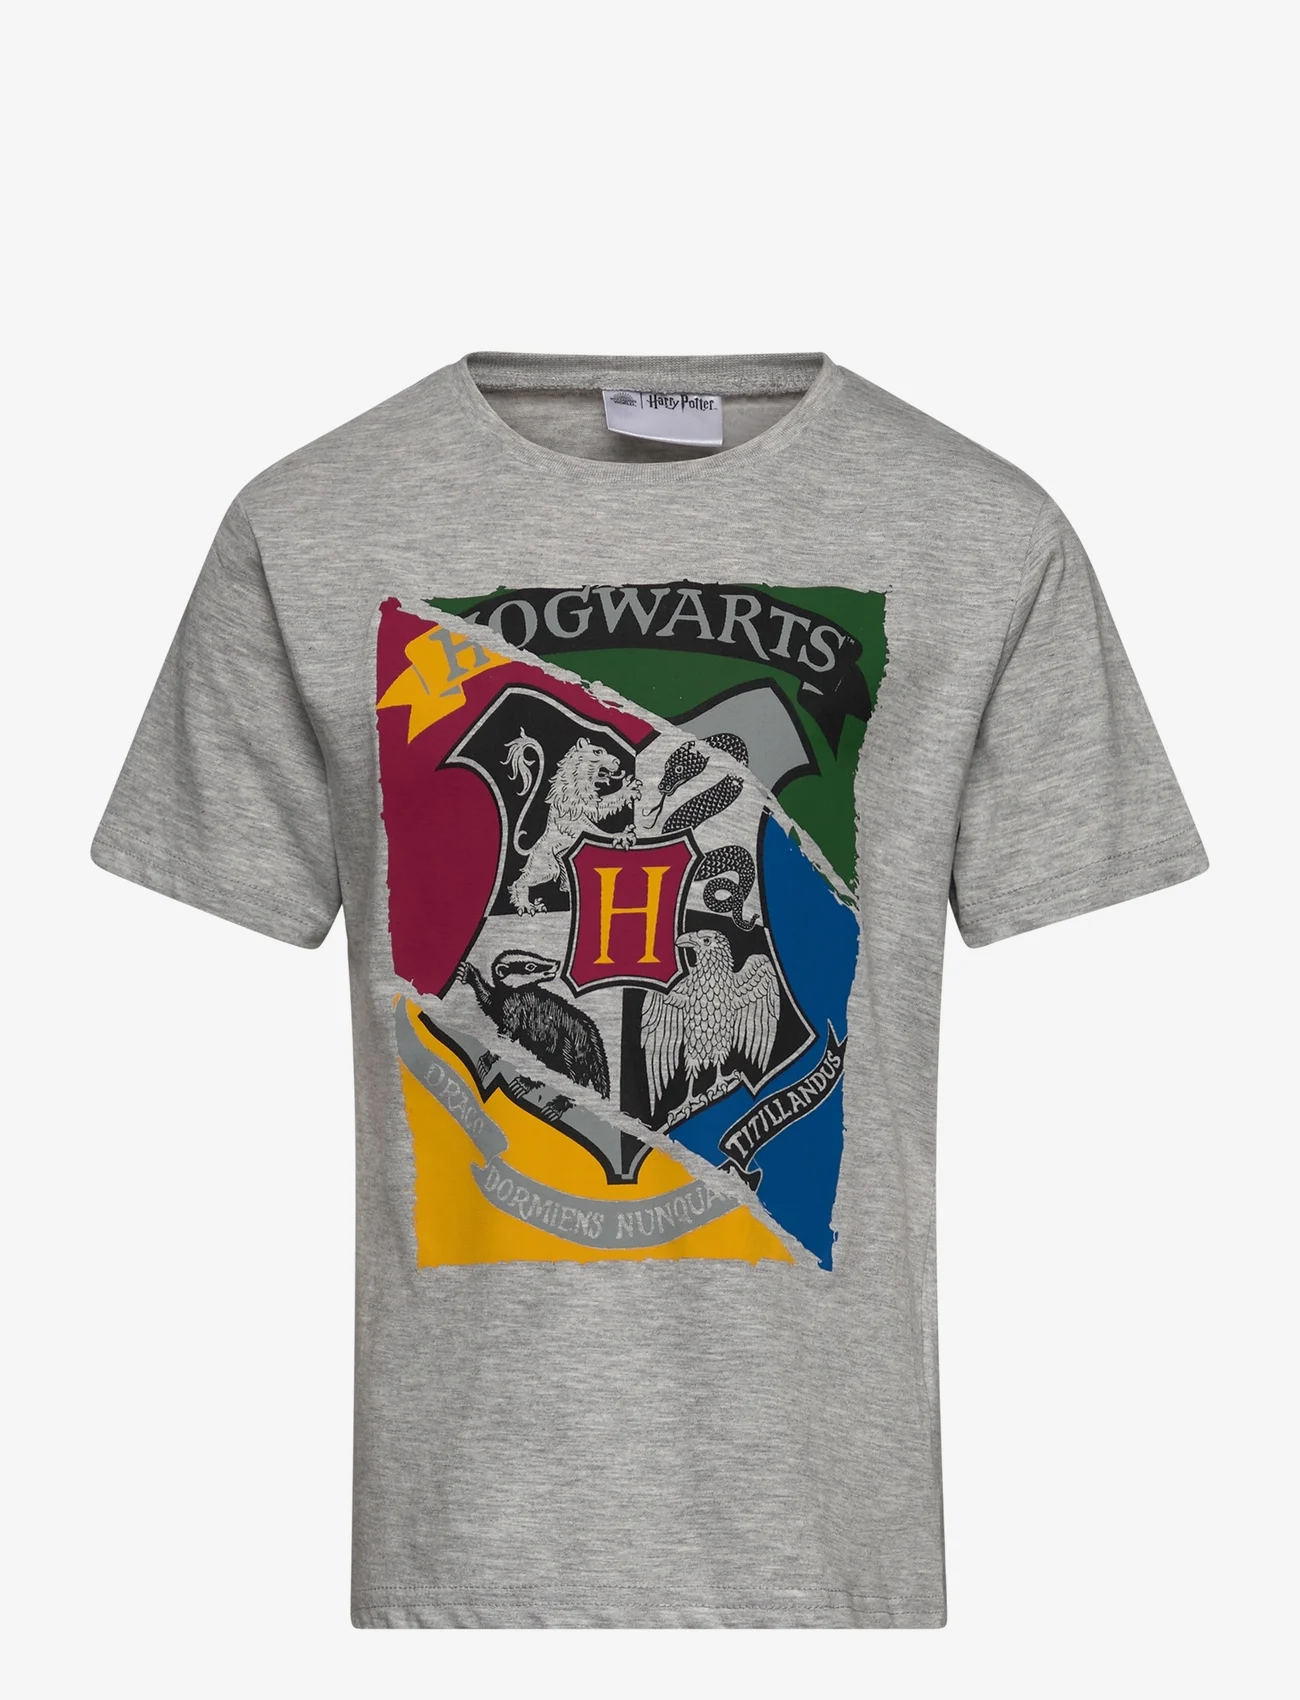 Harry Potter - SHORT-SLEEVED T-SHIRT - short-sleeved t-shirts - light grey - 0